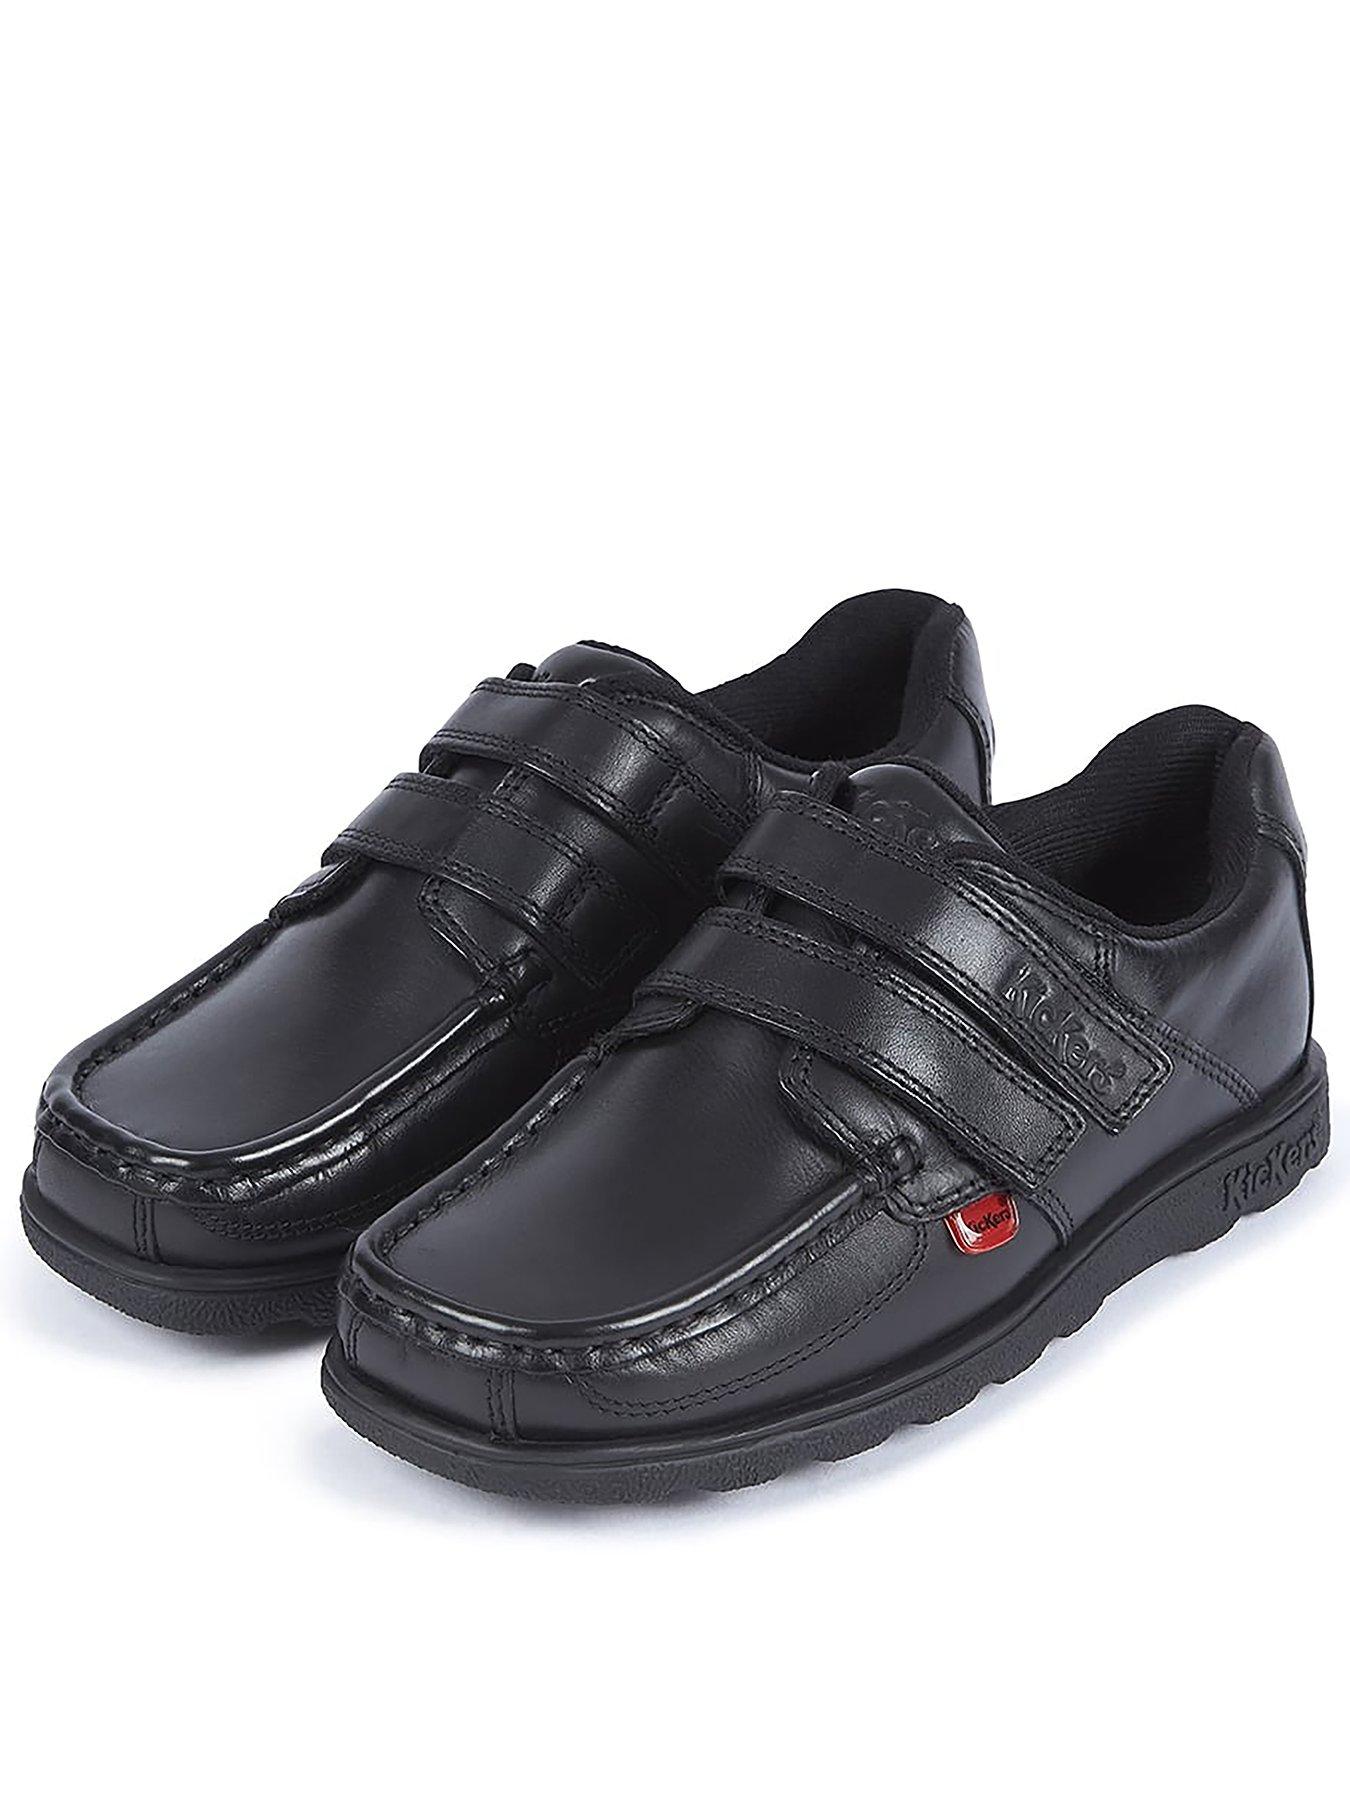 Kickers Kickers FRAGMA STRAP Infant  Boys  Leather School Shoes Black EU 22 UK Child 5 